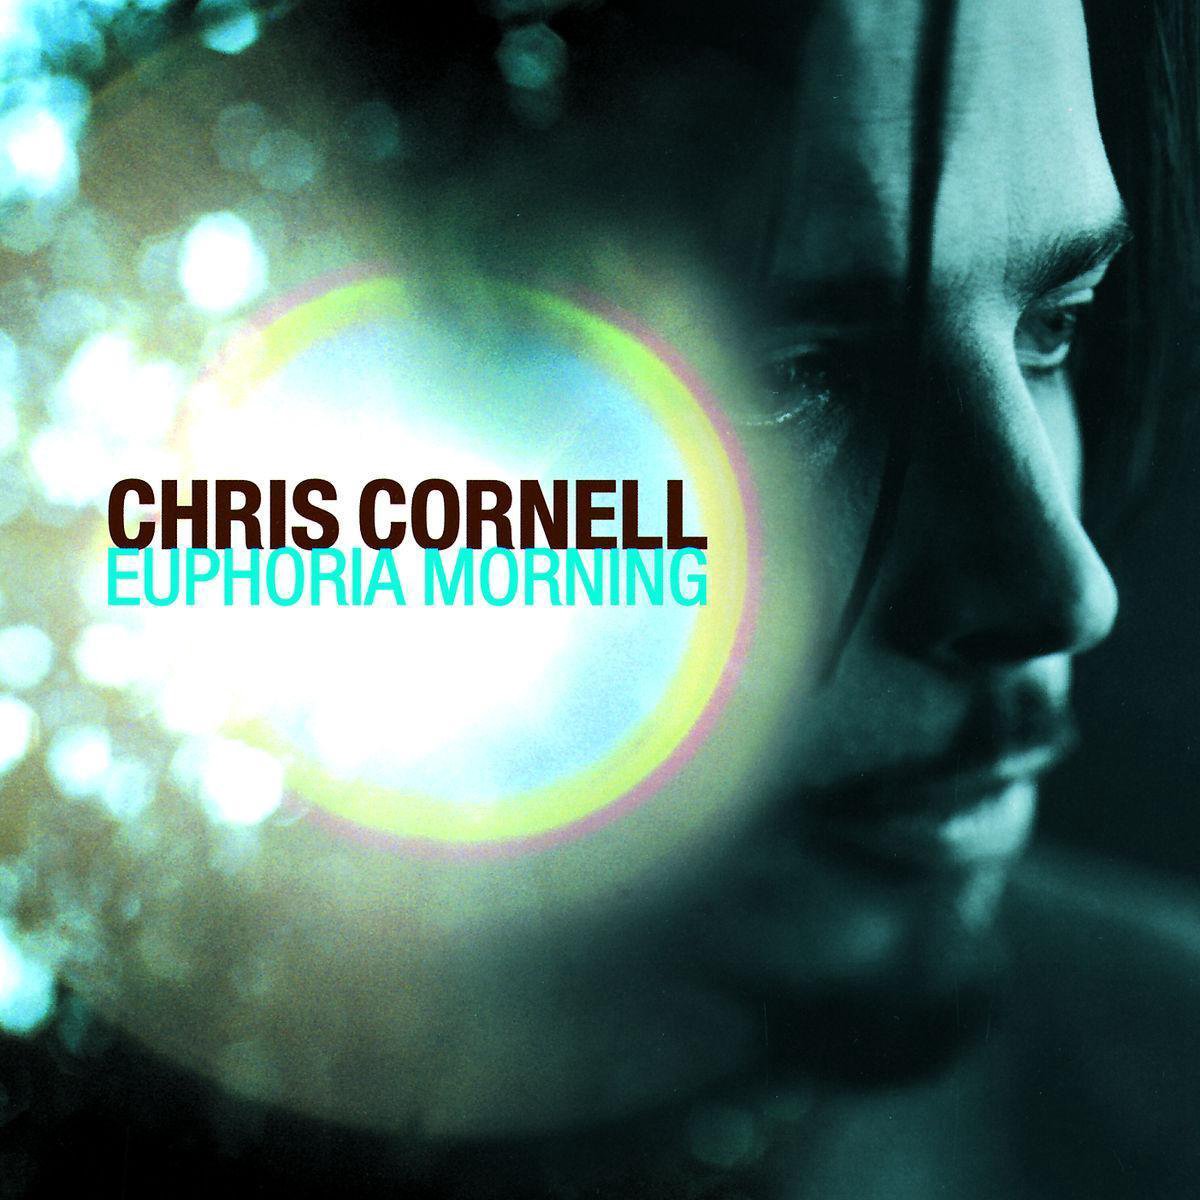 Euphoria Morning | Chris Cornell image7